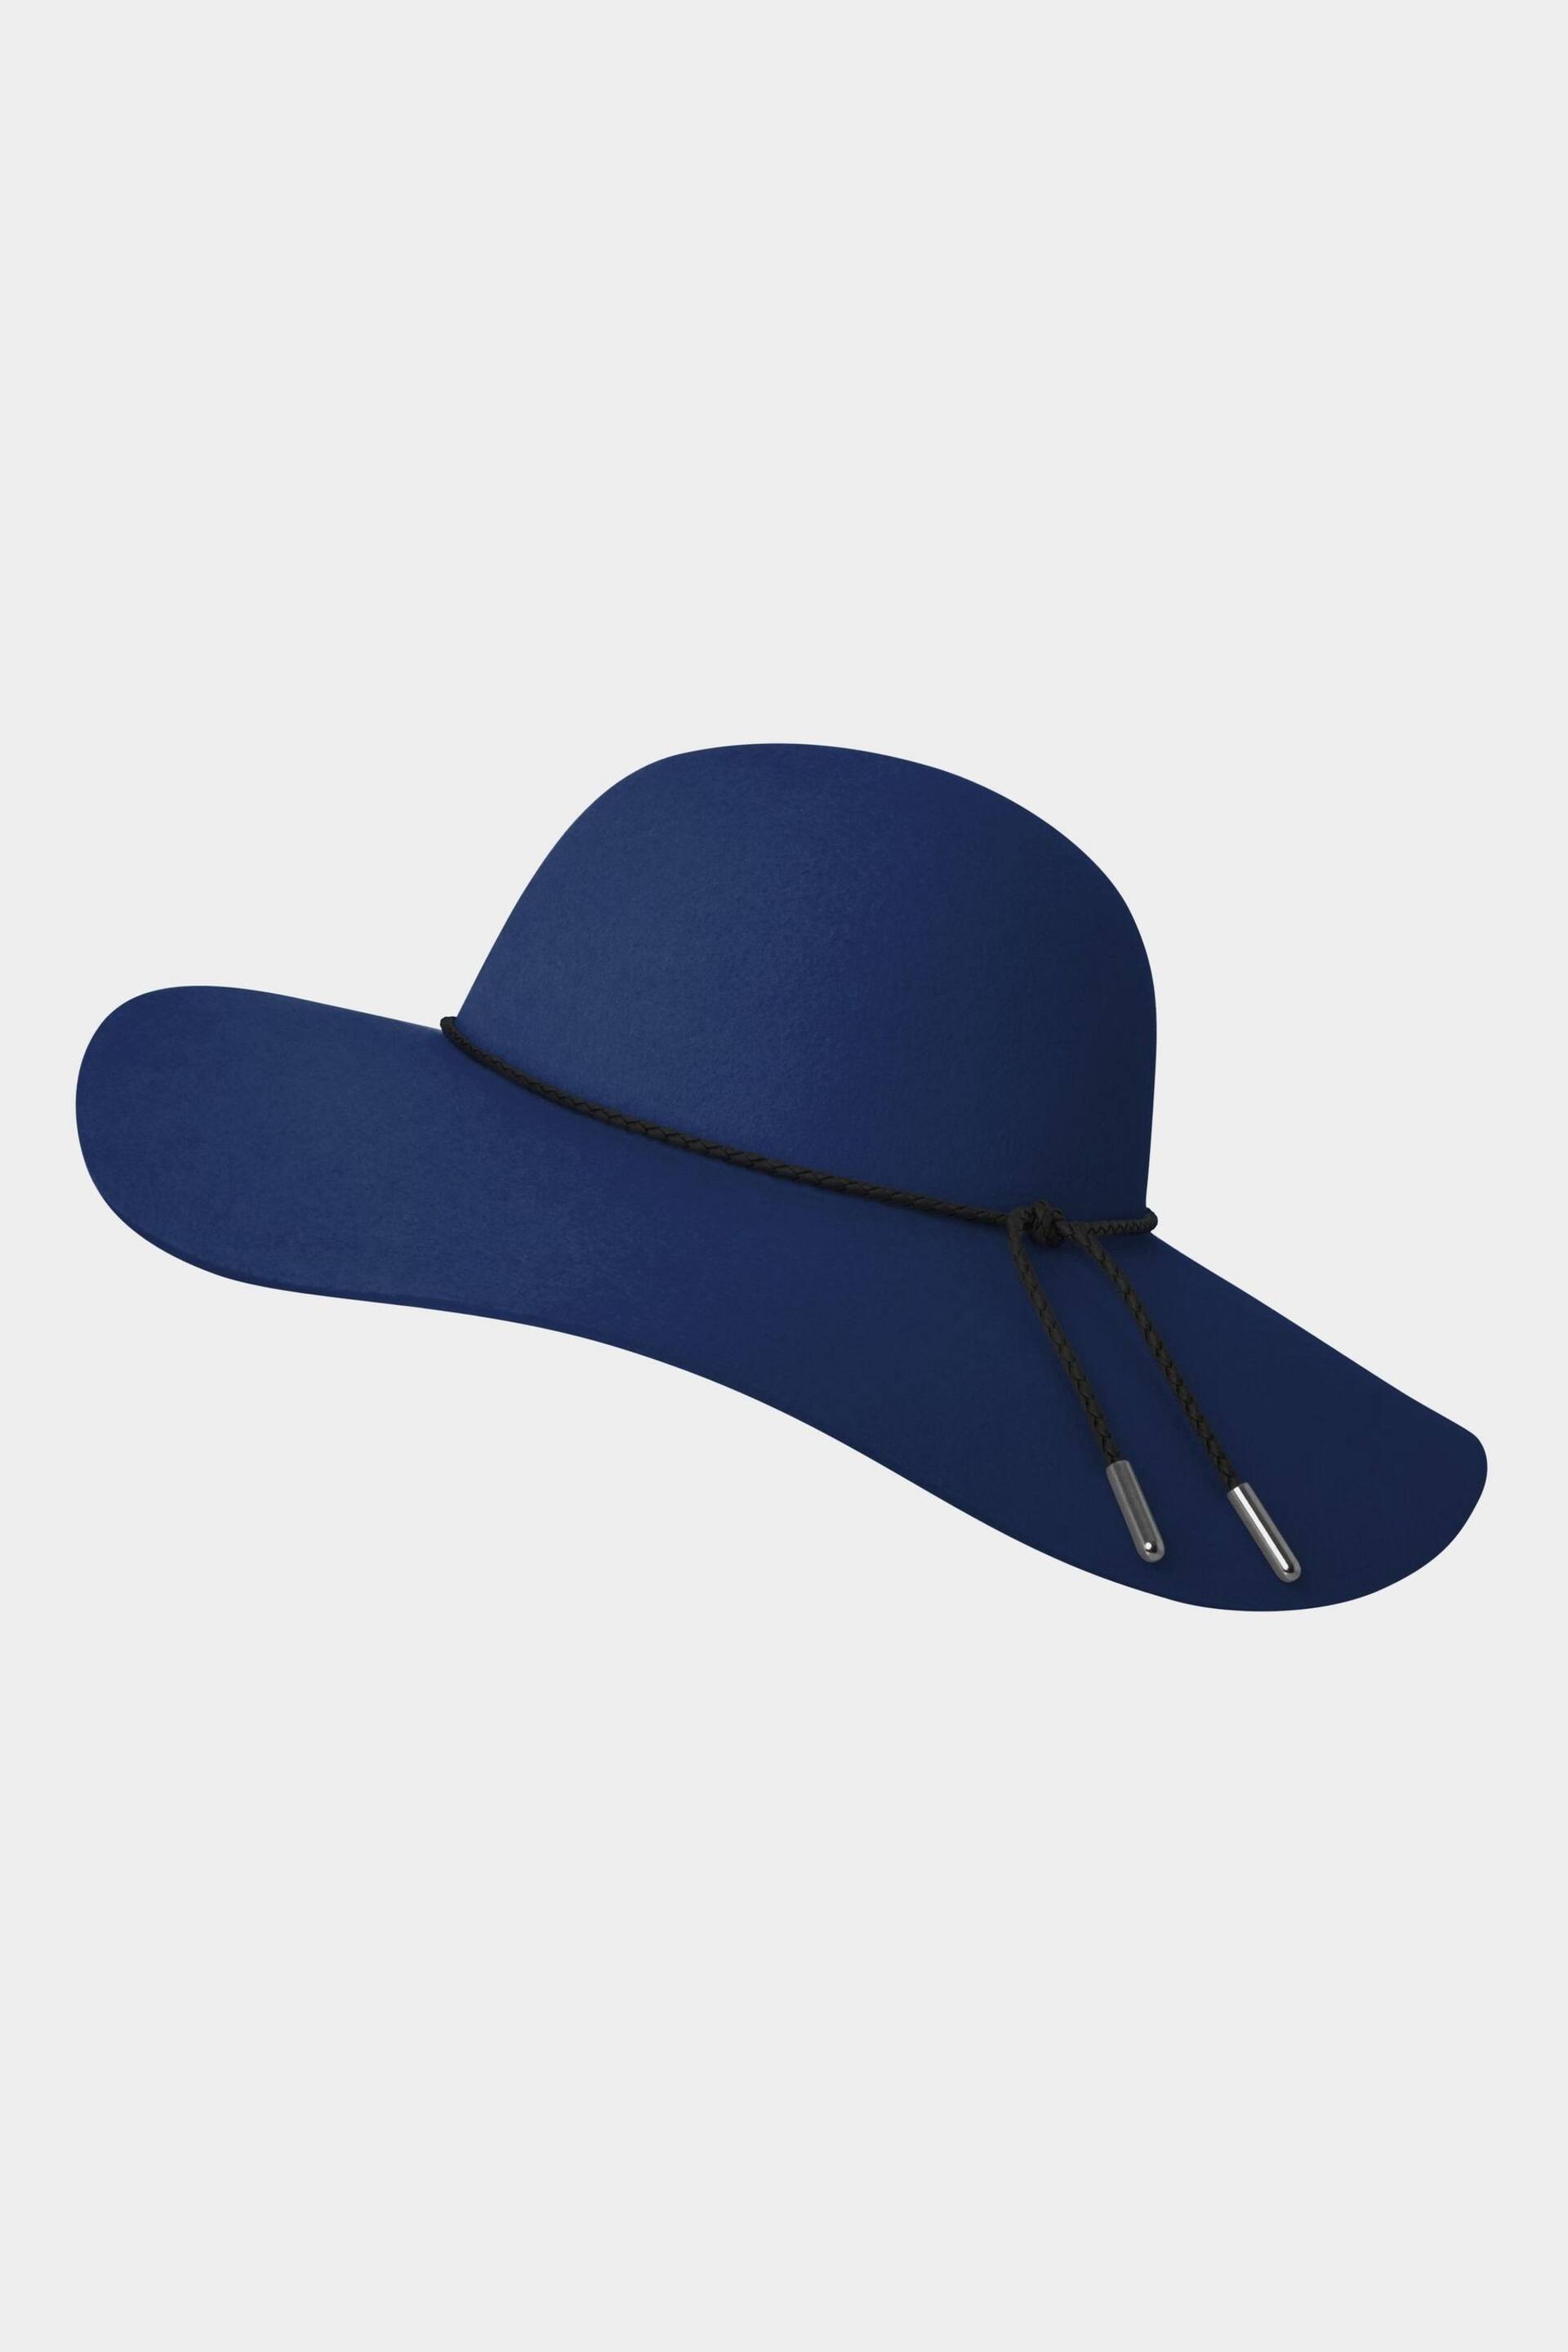 Joe Browns Blue Boho Wool Plait Floppy Hat - Image 2 of 4